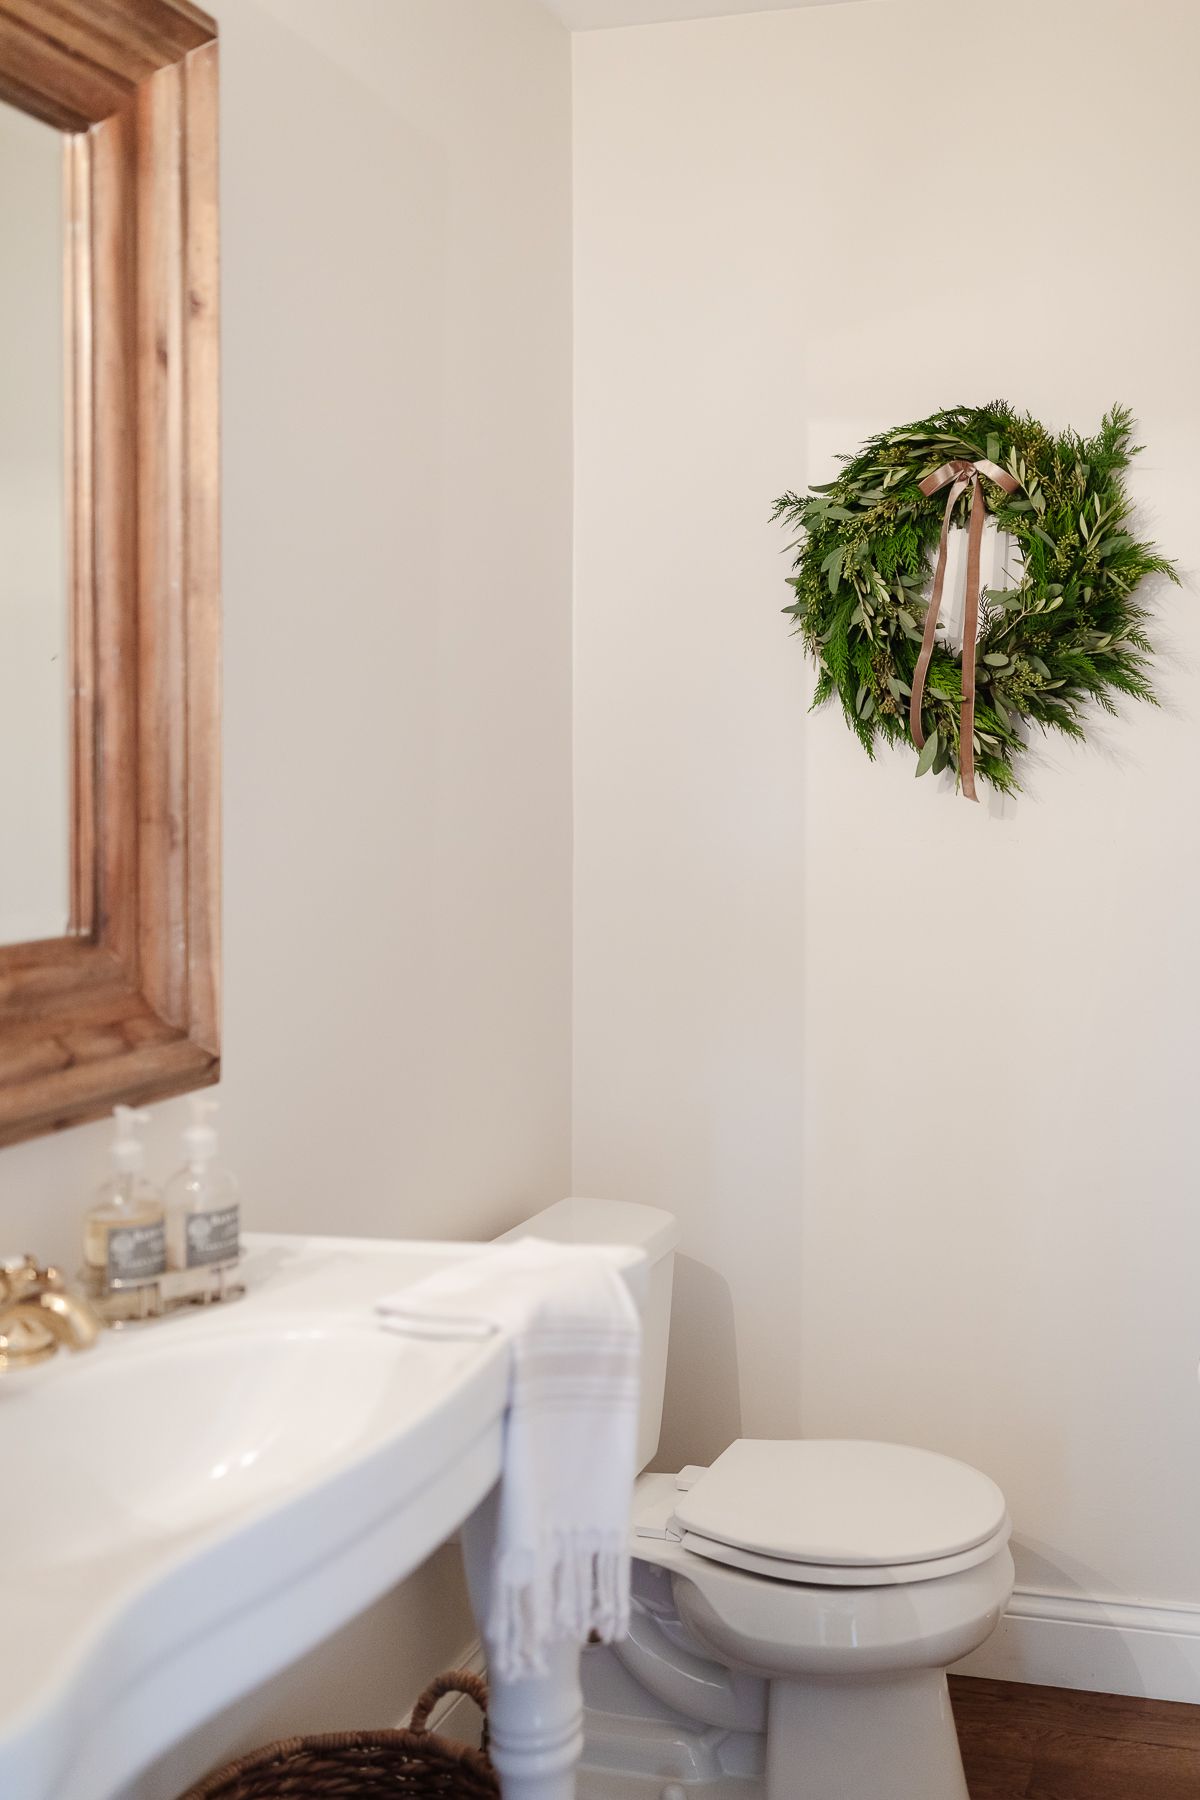 A fresh Christmas wreath in a half bathroom with white walls